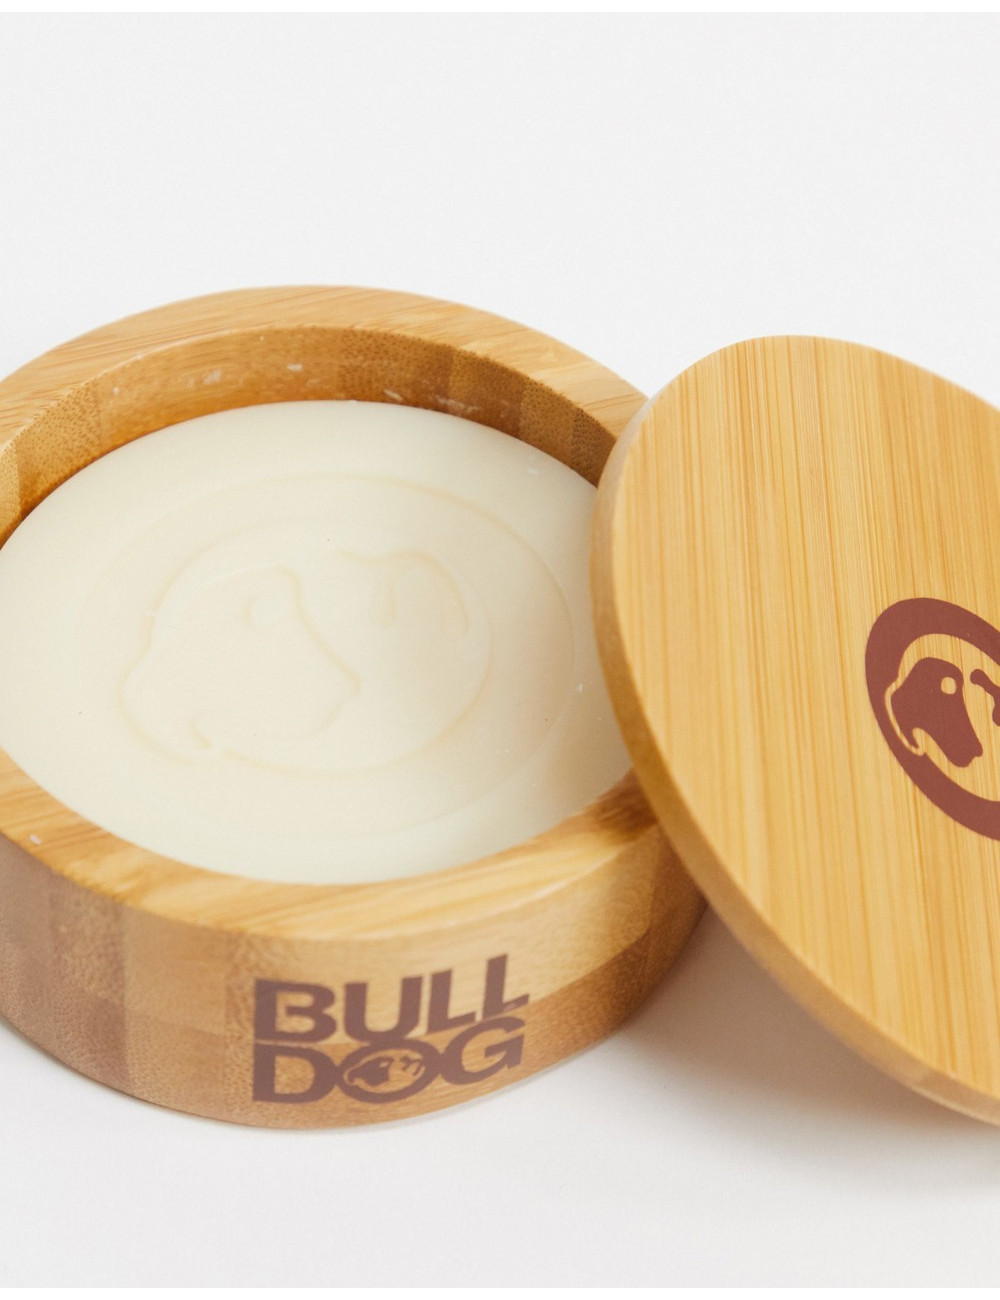 Bulldog Original Shave Soap...